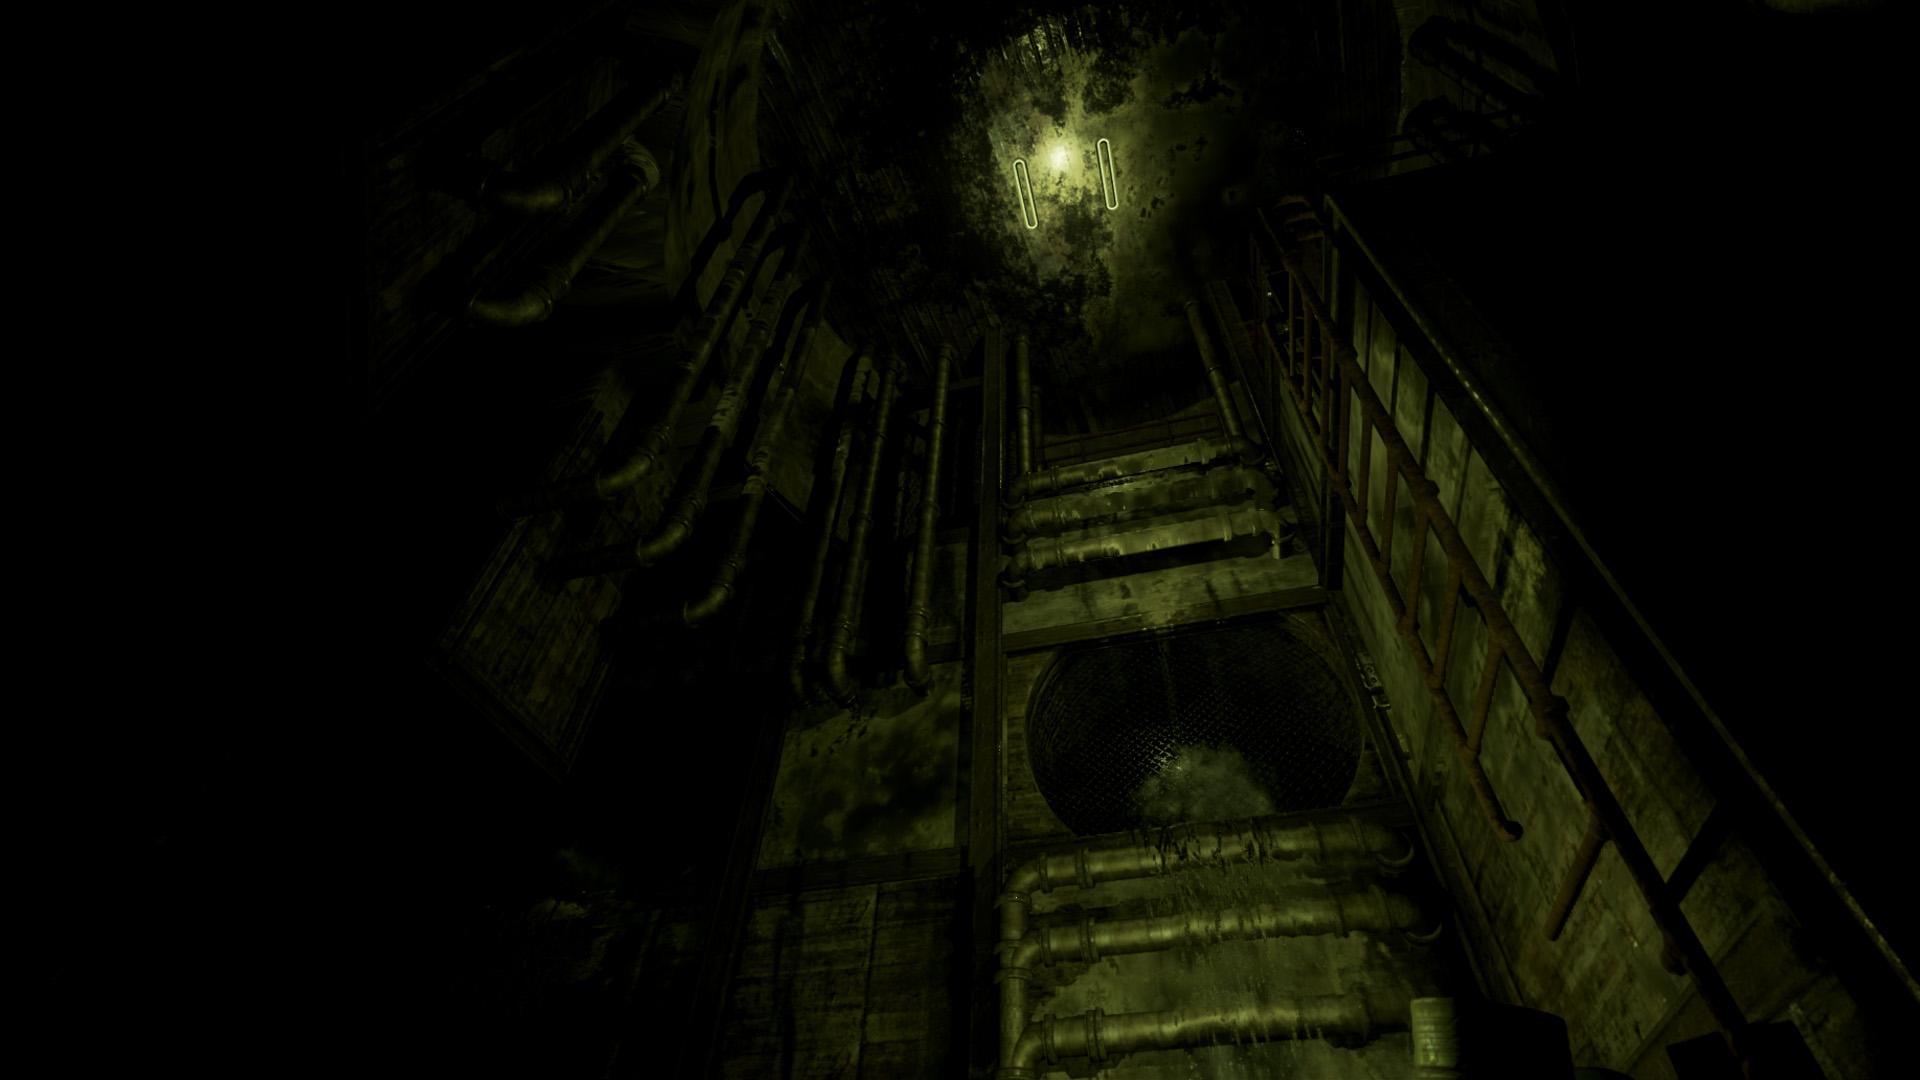 Screenshot №9 from game Amigdala